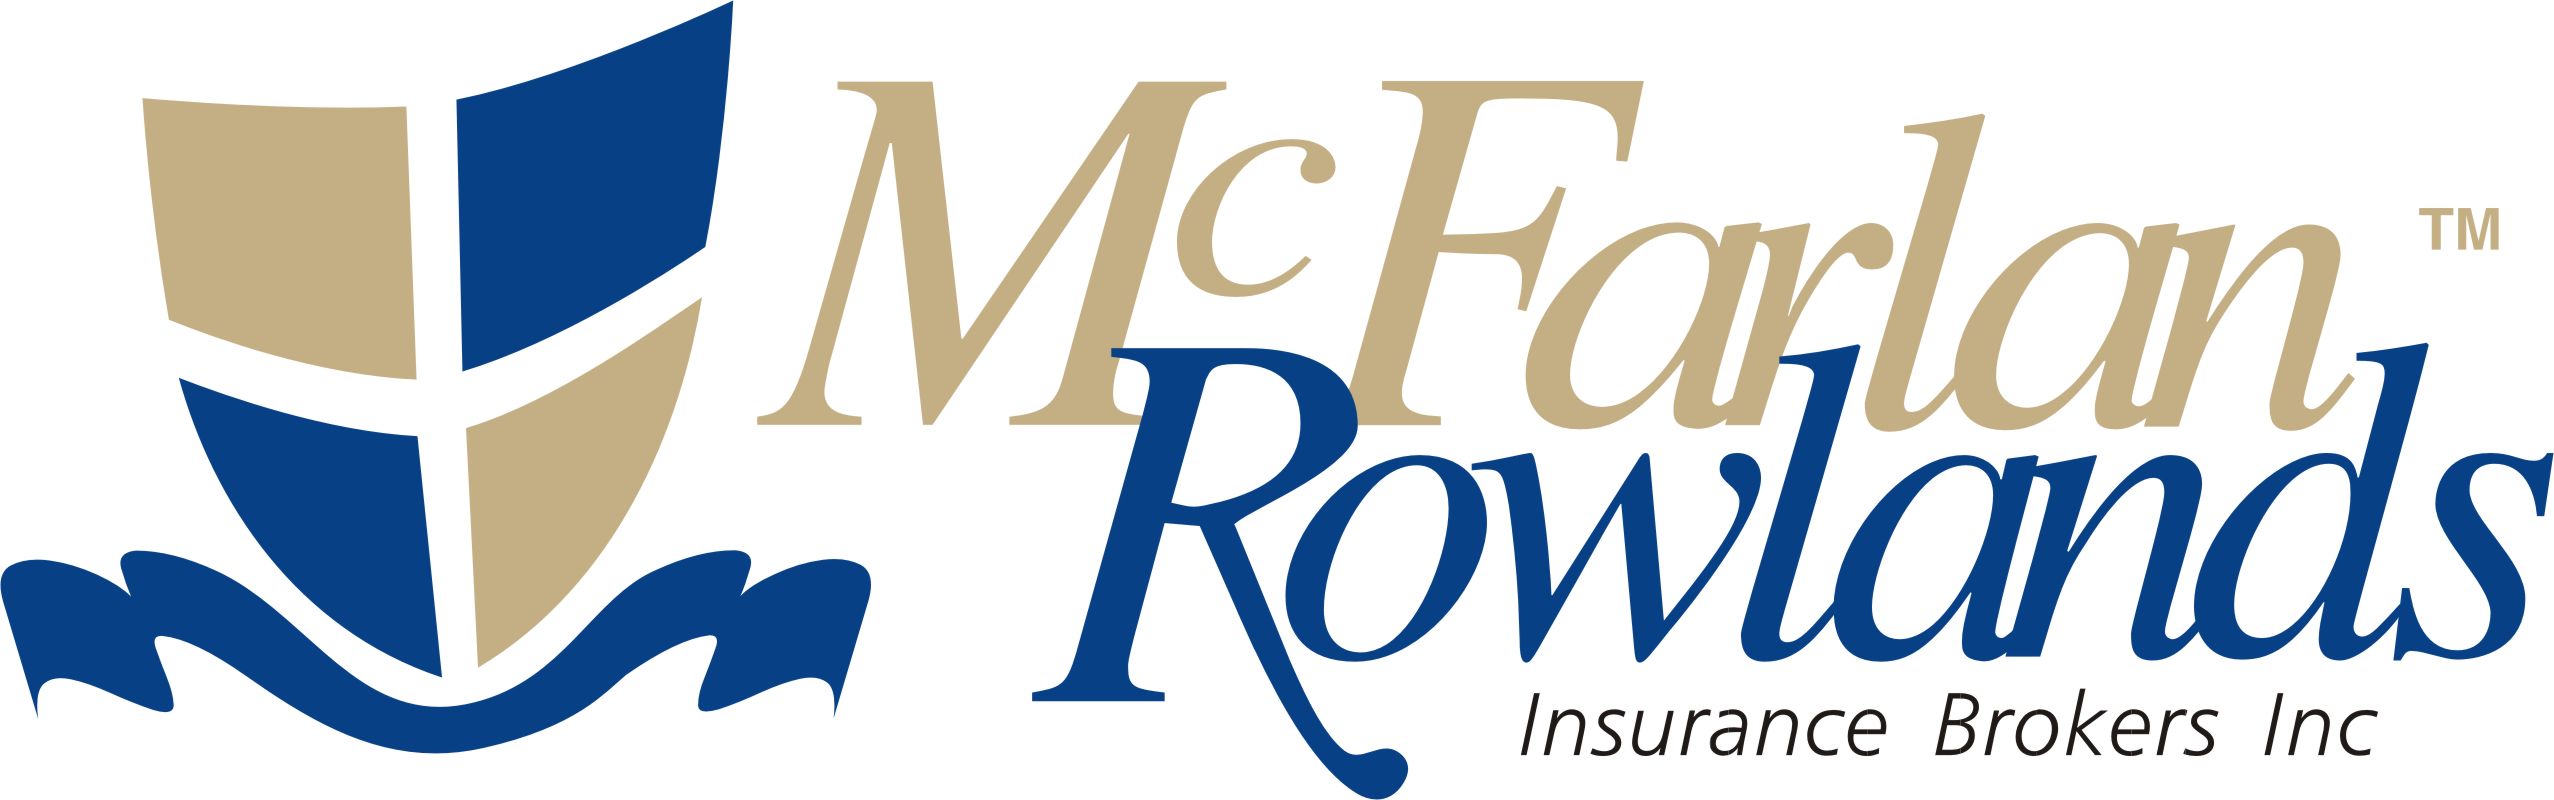 McFarlan Rowlands Insurance Brokers Inc